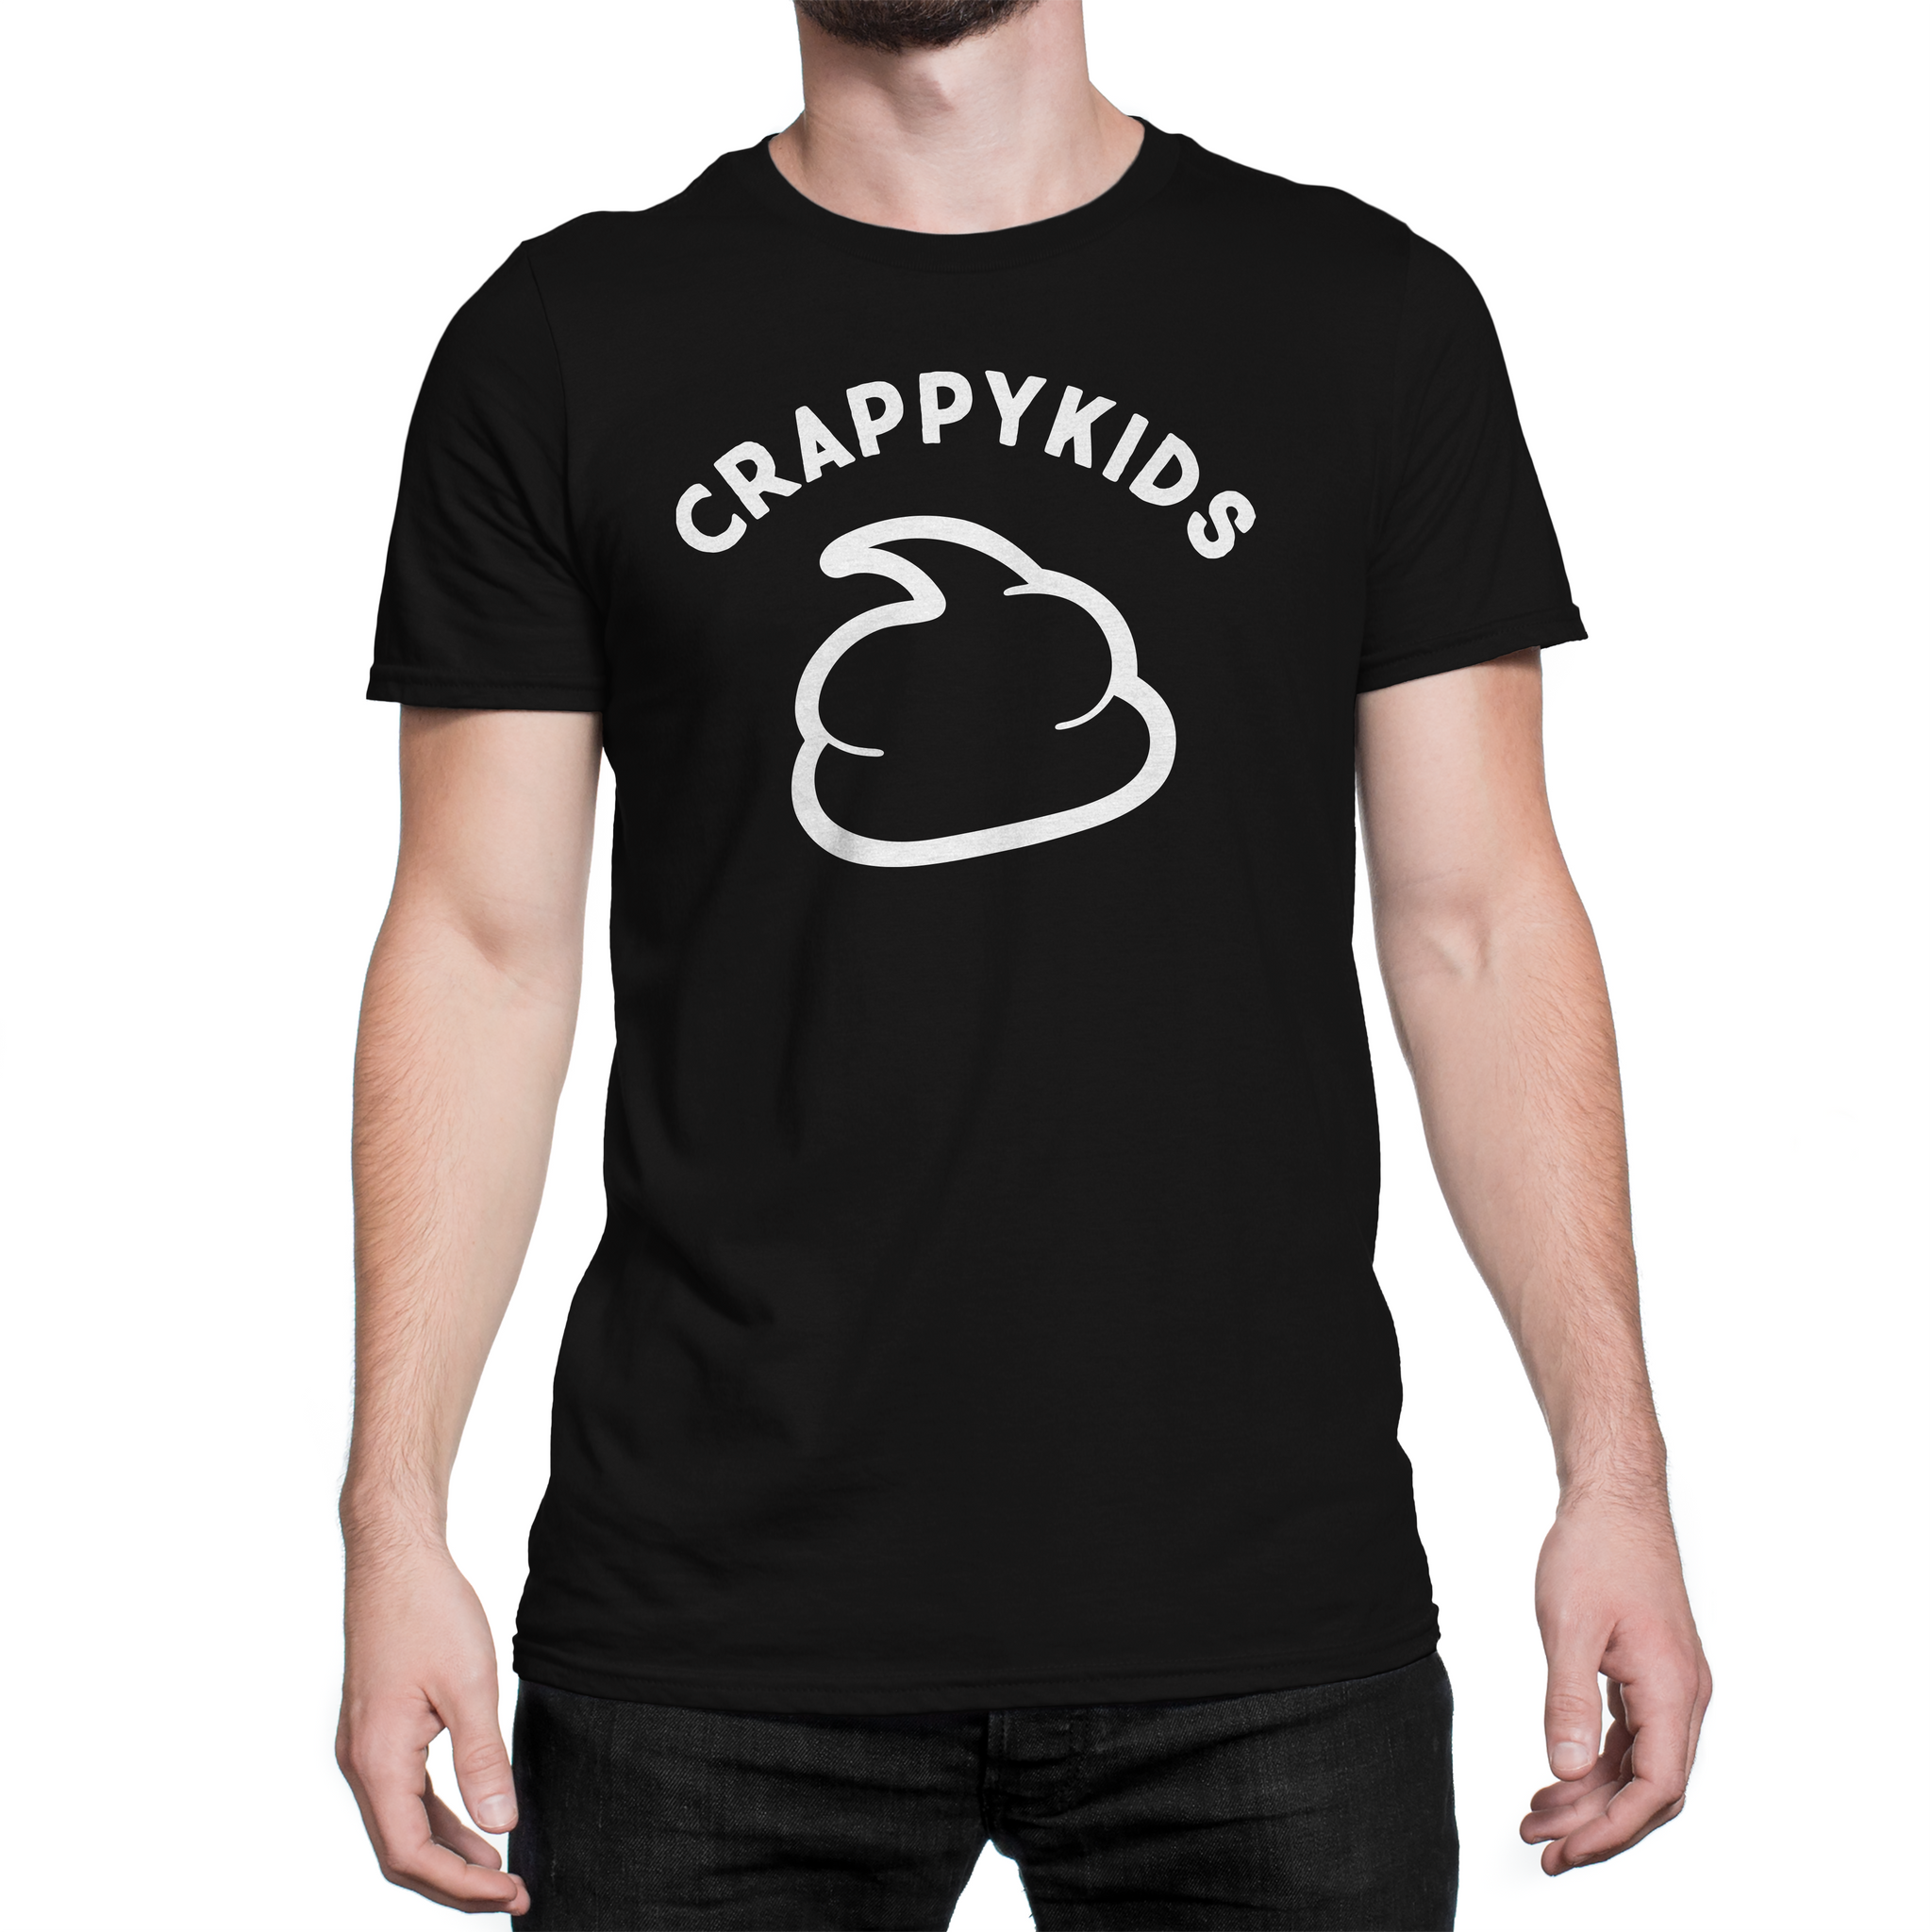 Crappykids Basic Black T-Shirt